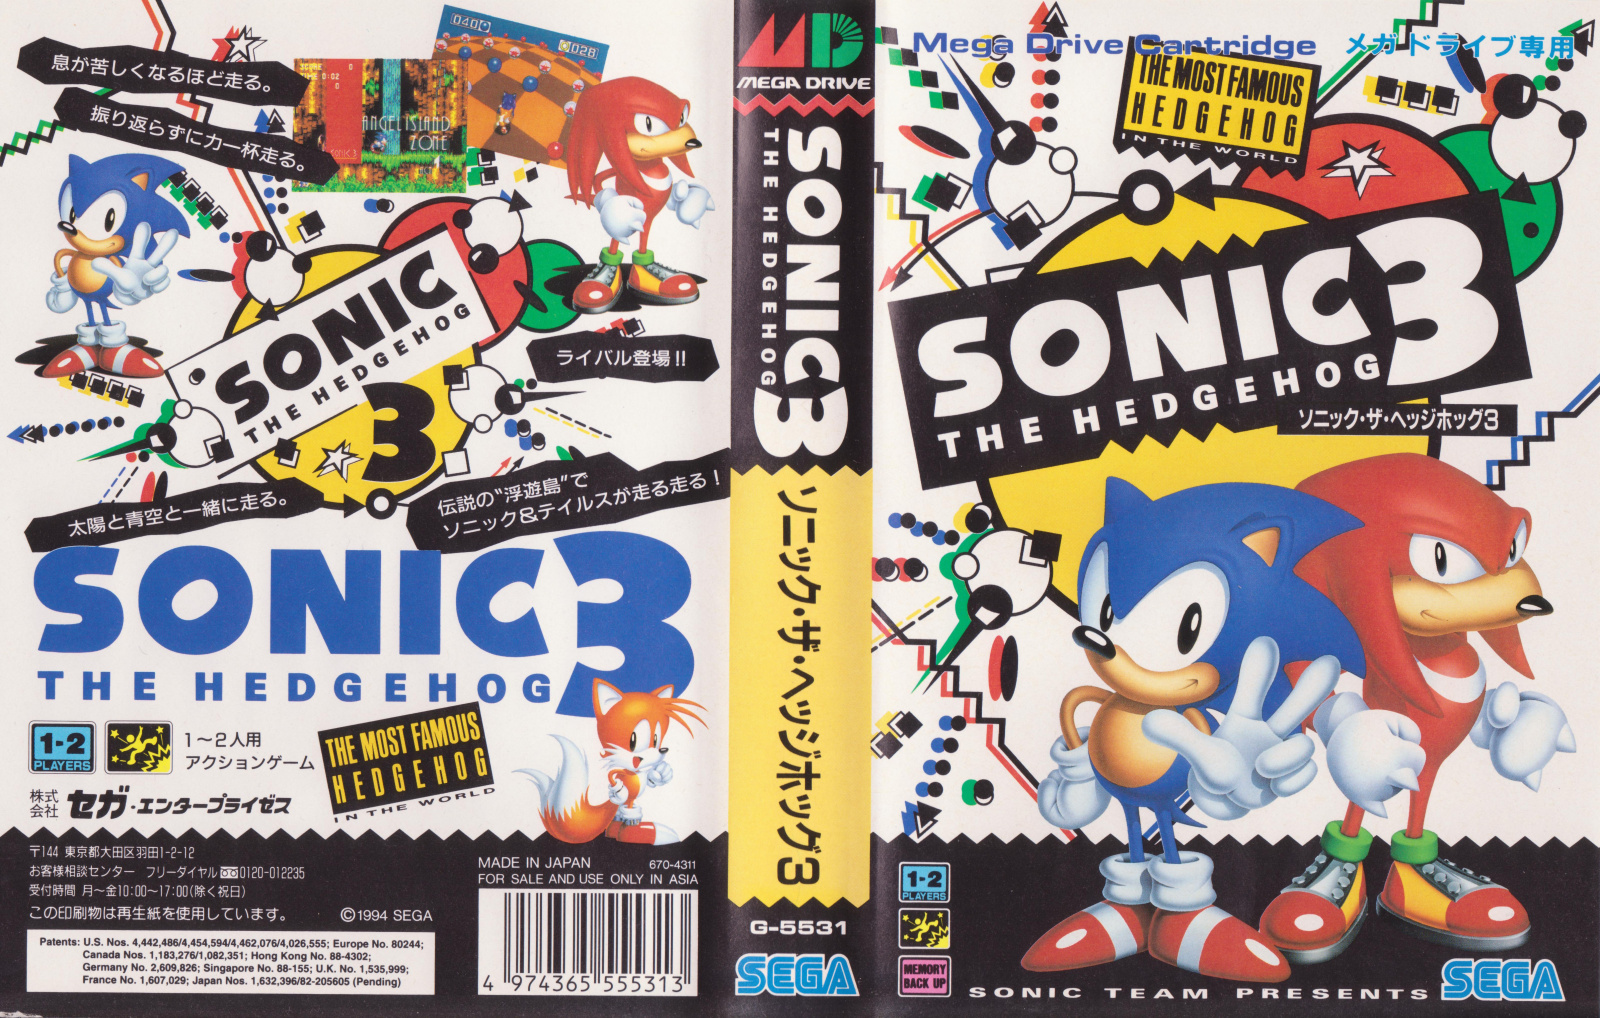 1600px-Sonic3-box-jap.jpg